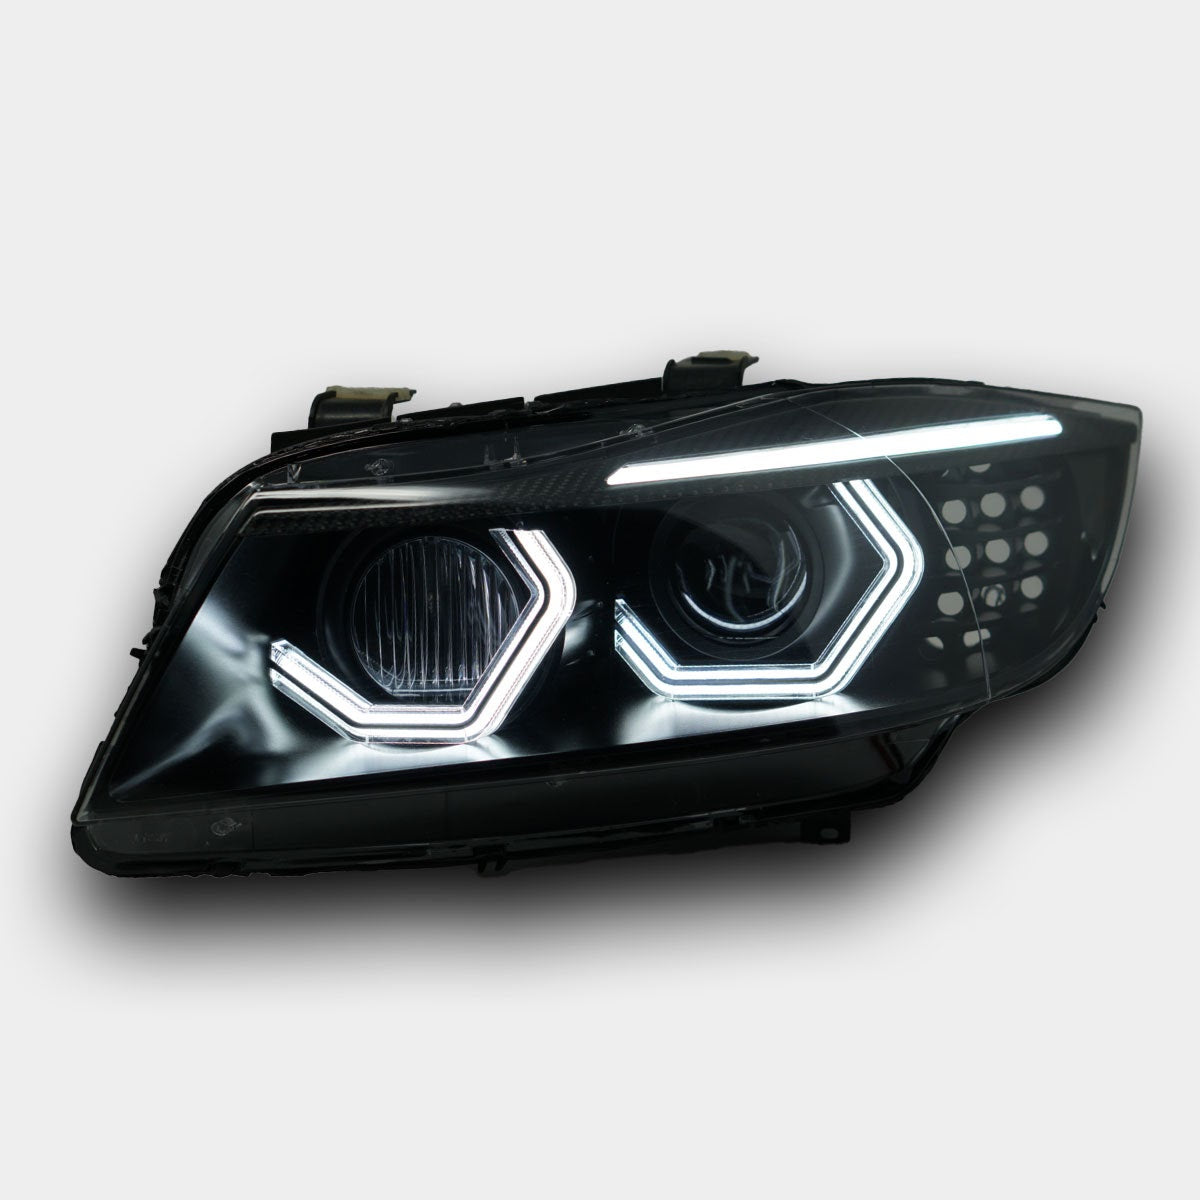 E90 E91 LCI Sedan Vision Retrofit (2009 - 2011 Xenon headlights only)